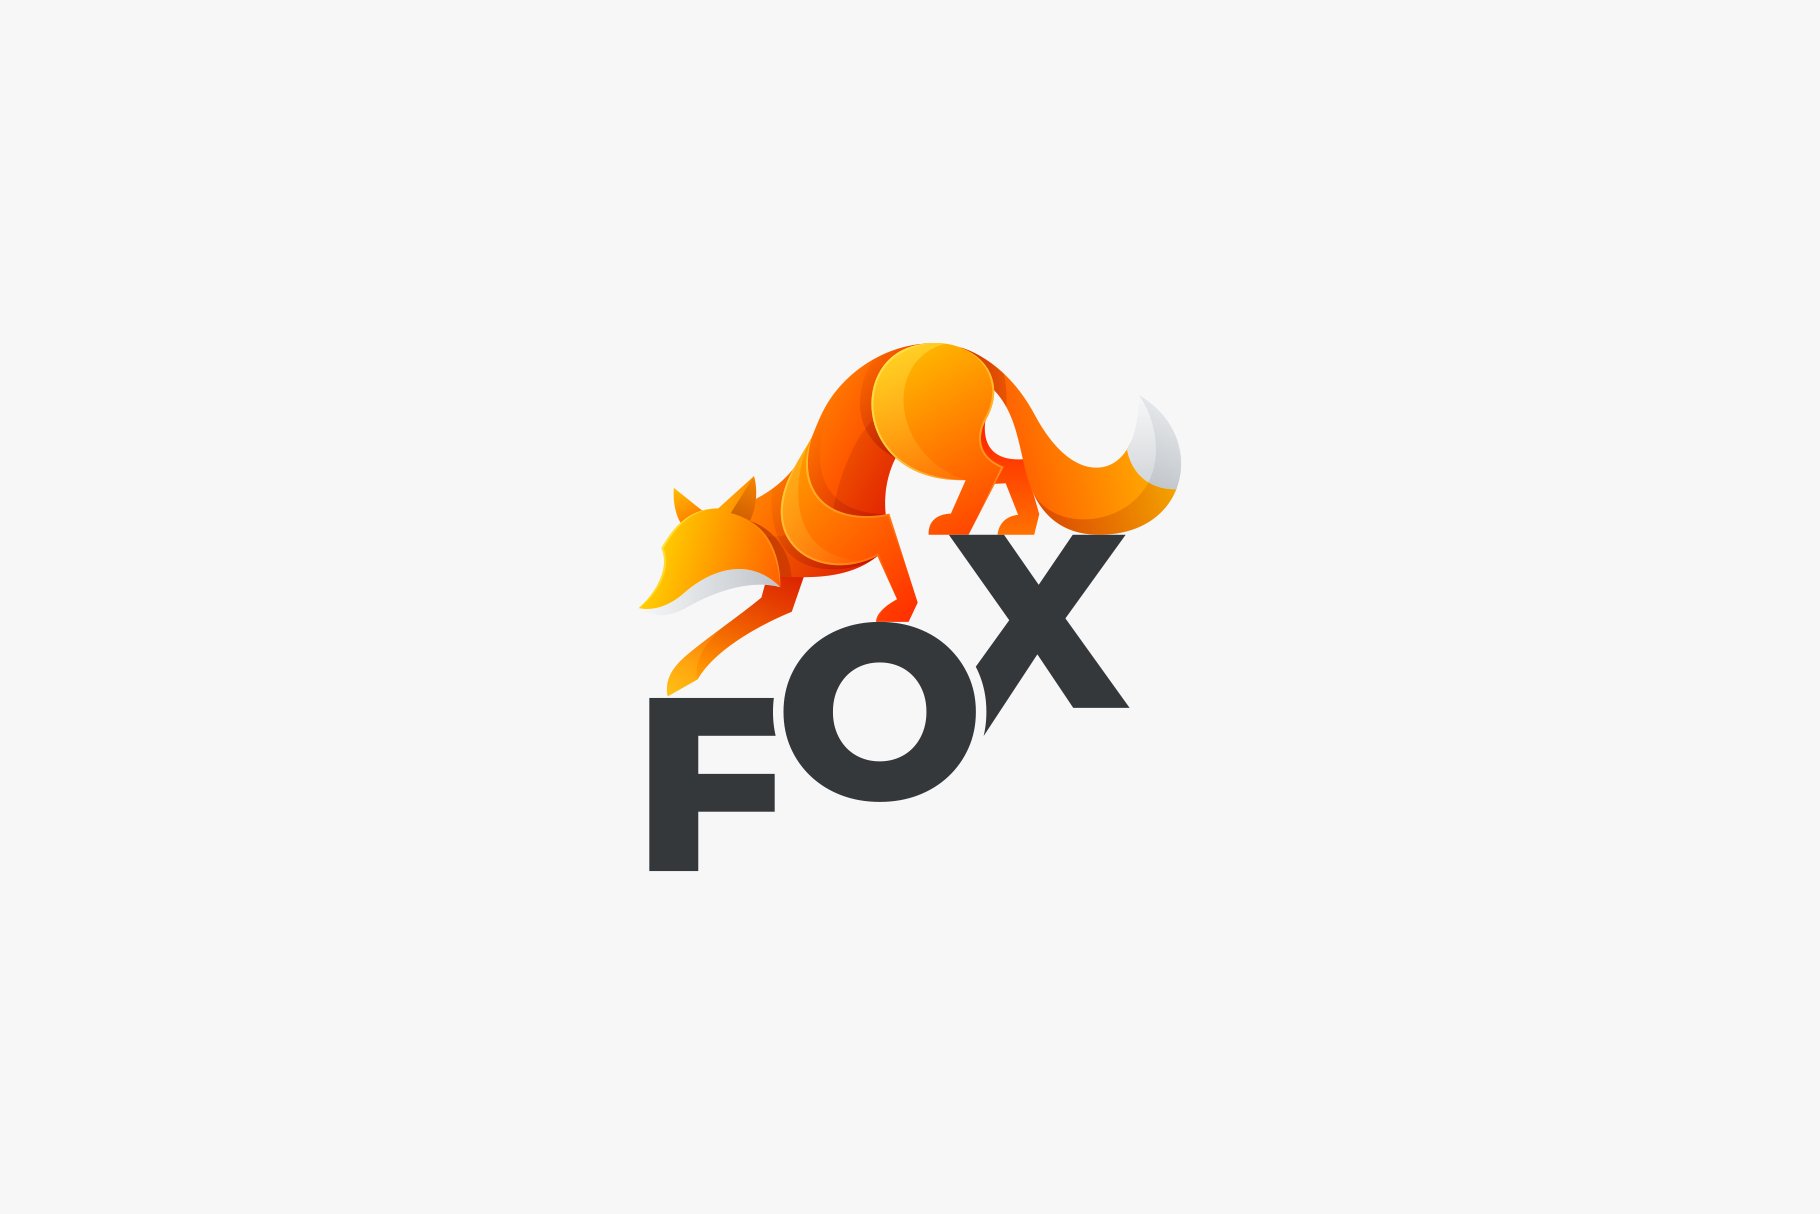 Fox Gradient Color Logo cover image.